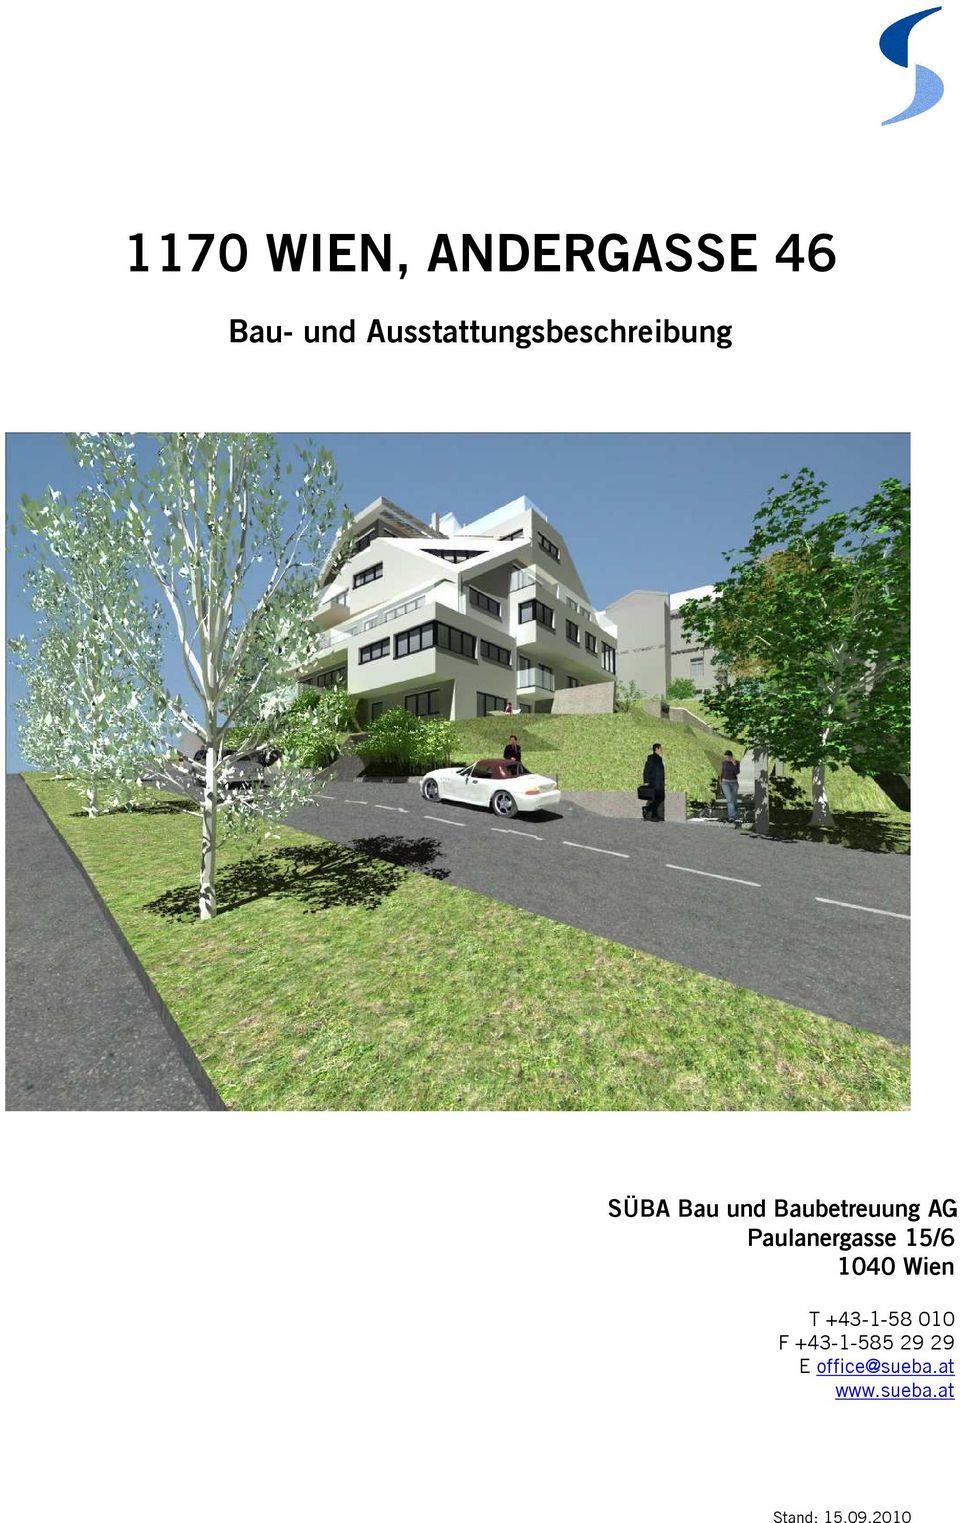 Baubetreuung AG Paulanergasse 15/6 1040 Wien T